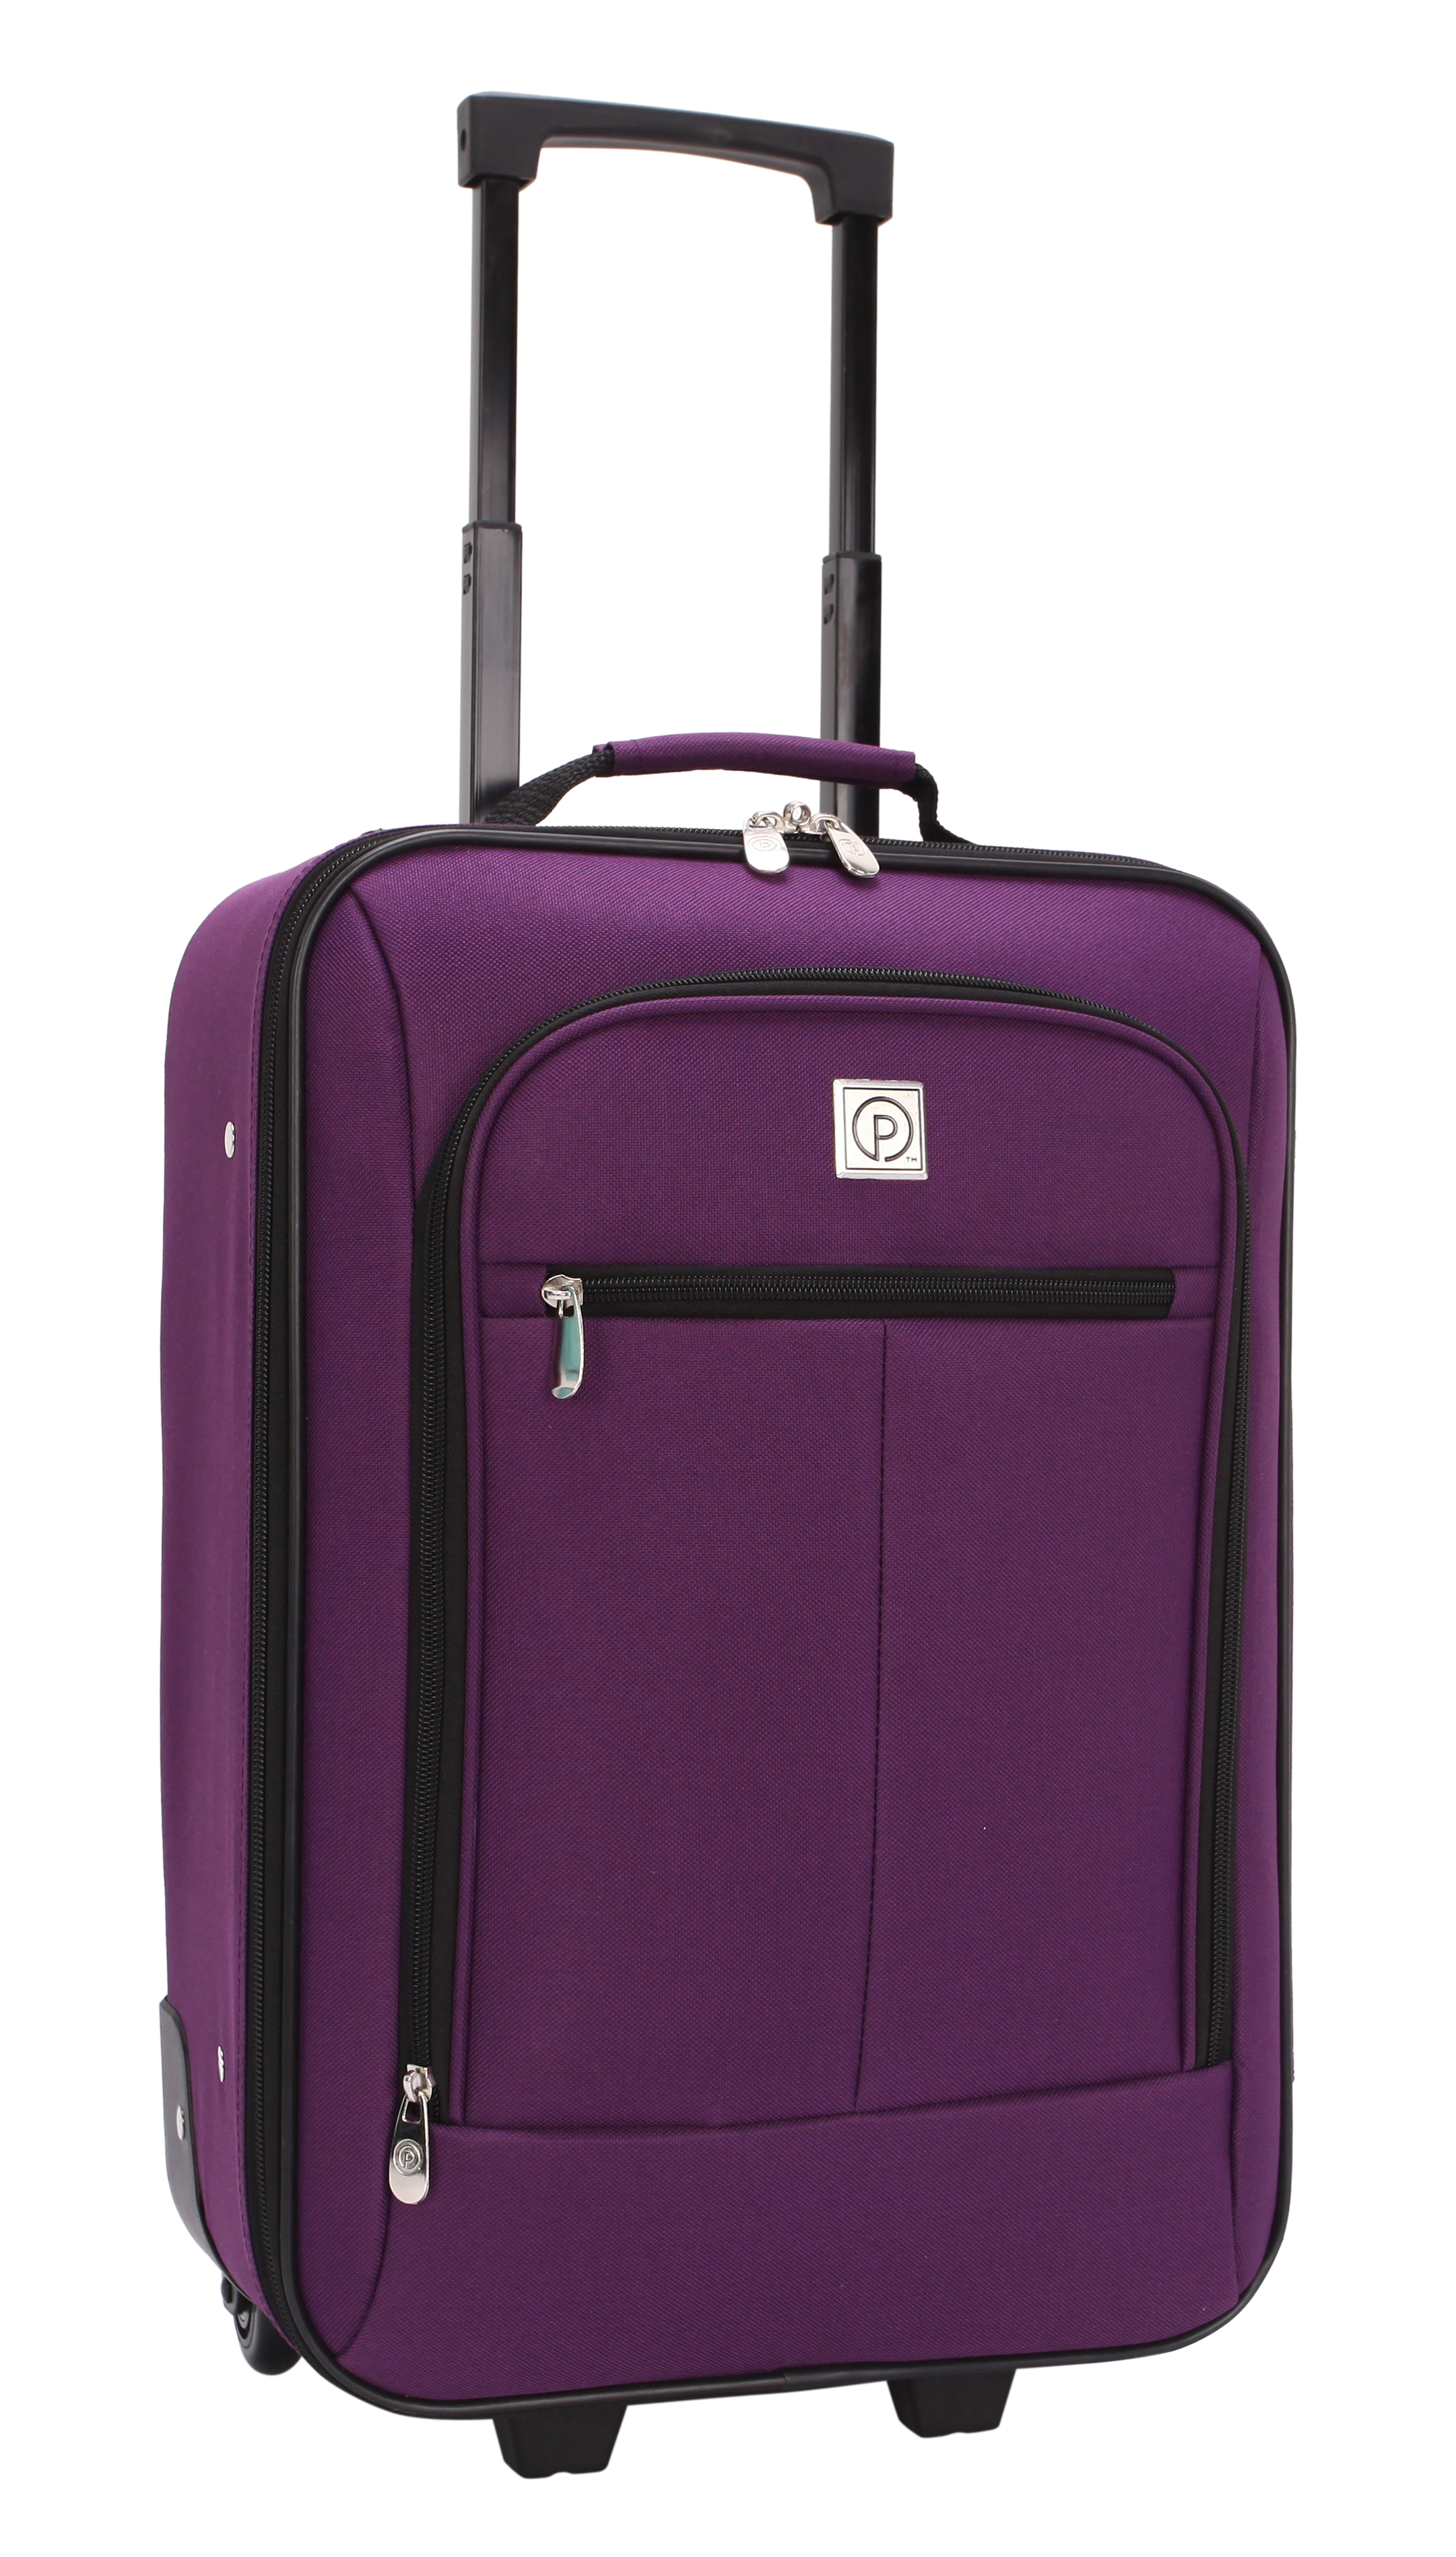 Protege Pilot Case 18" Carry-on Luggage, Purple, 12.5"L x 6.5"D x 19.25"H - image 2 of 7